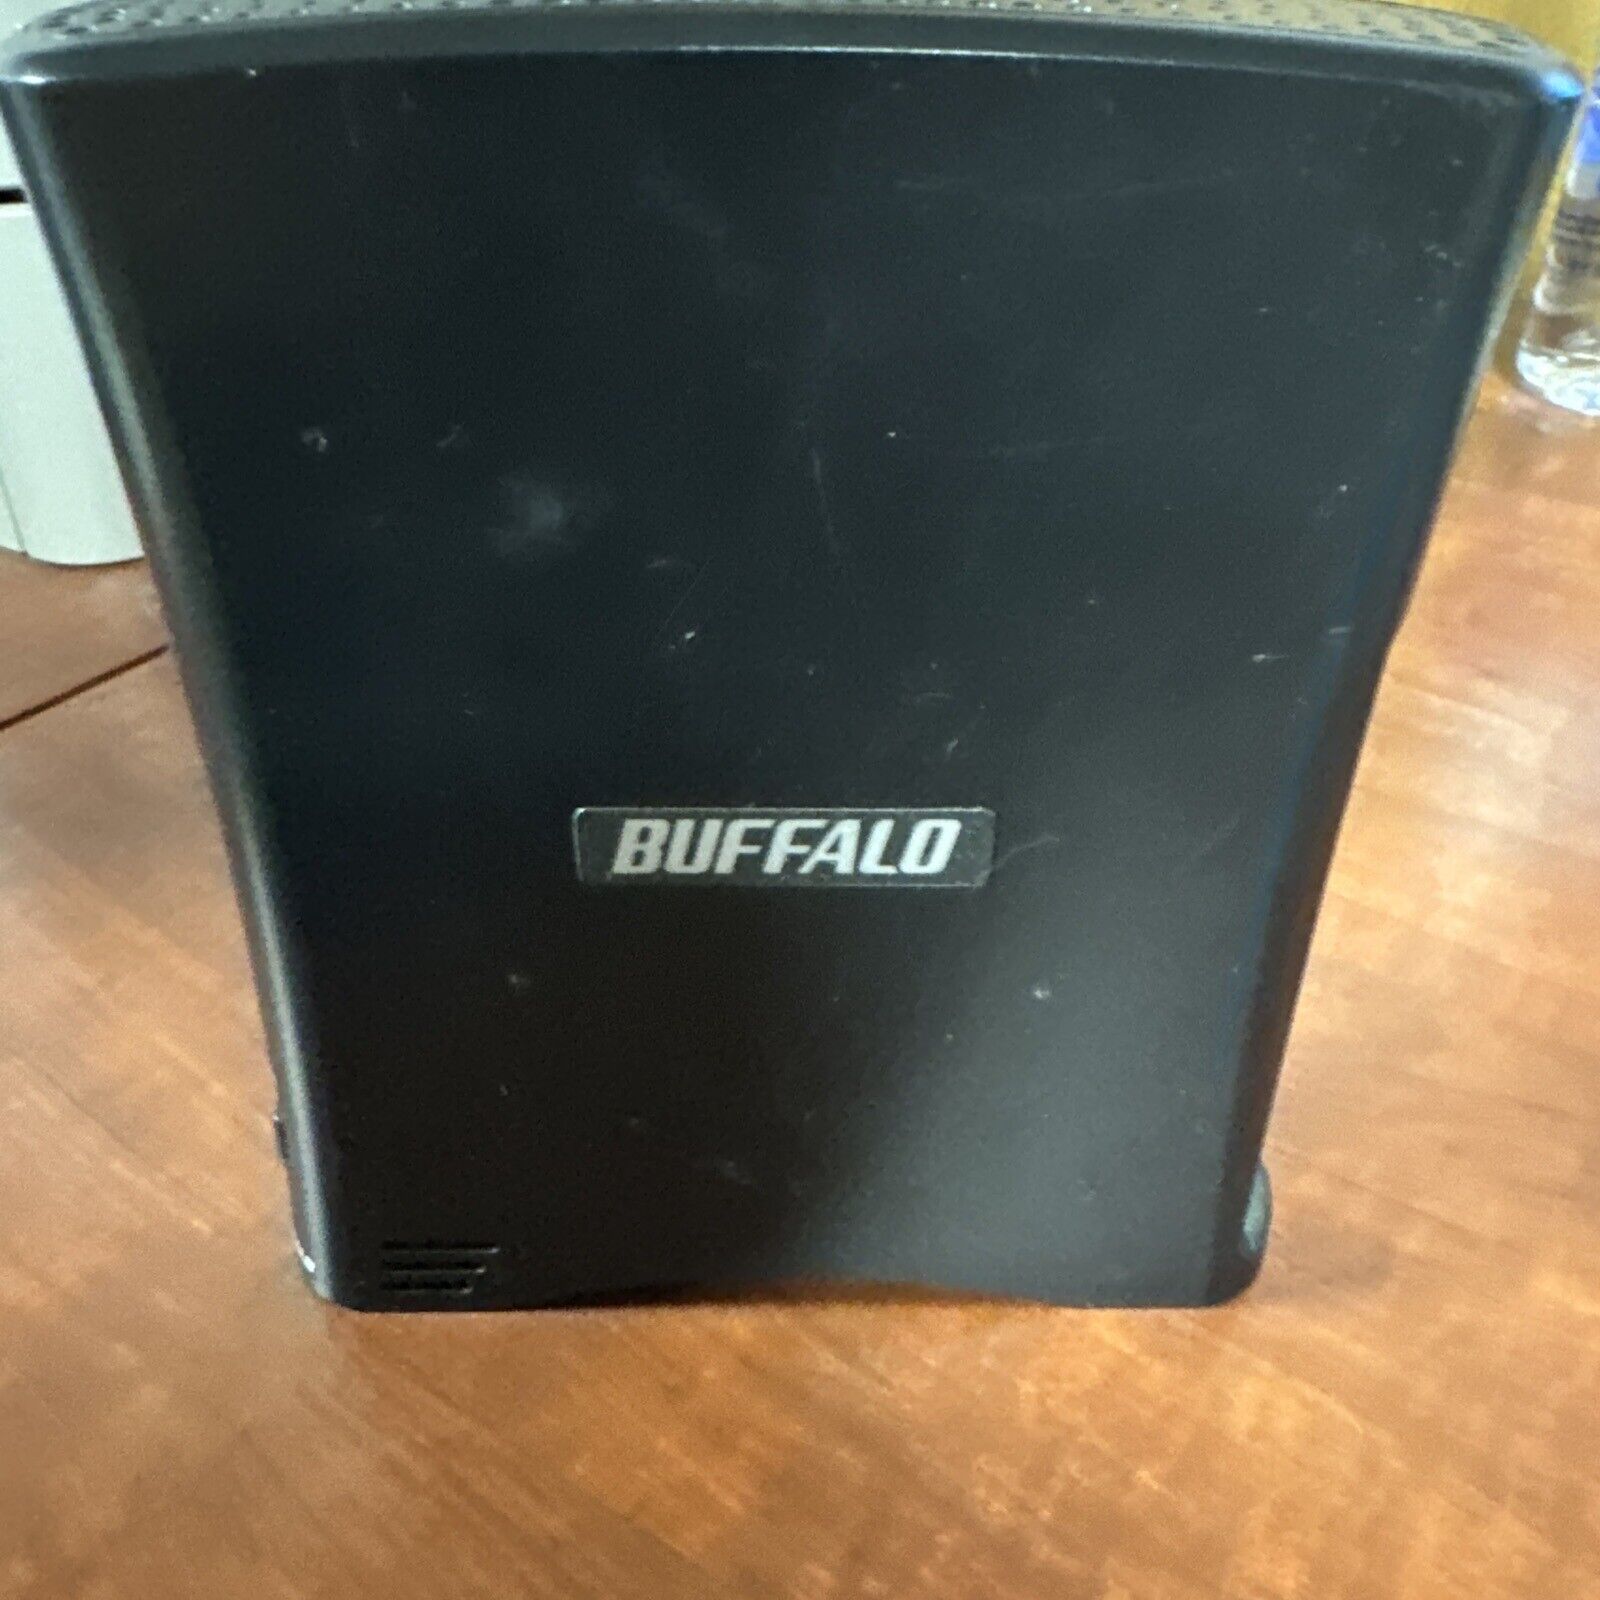 Buffalo 500GB USB 2.0 DriveStation External Hybrid Hard Drive. HD-CE-500LU2-US